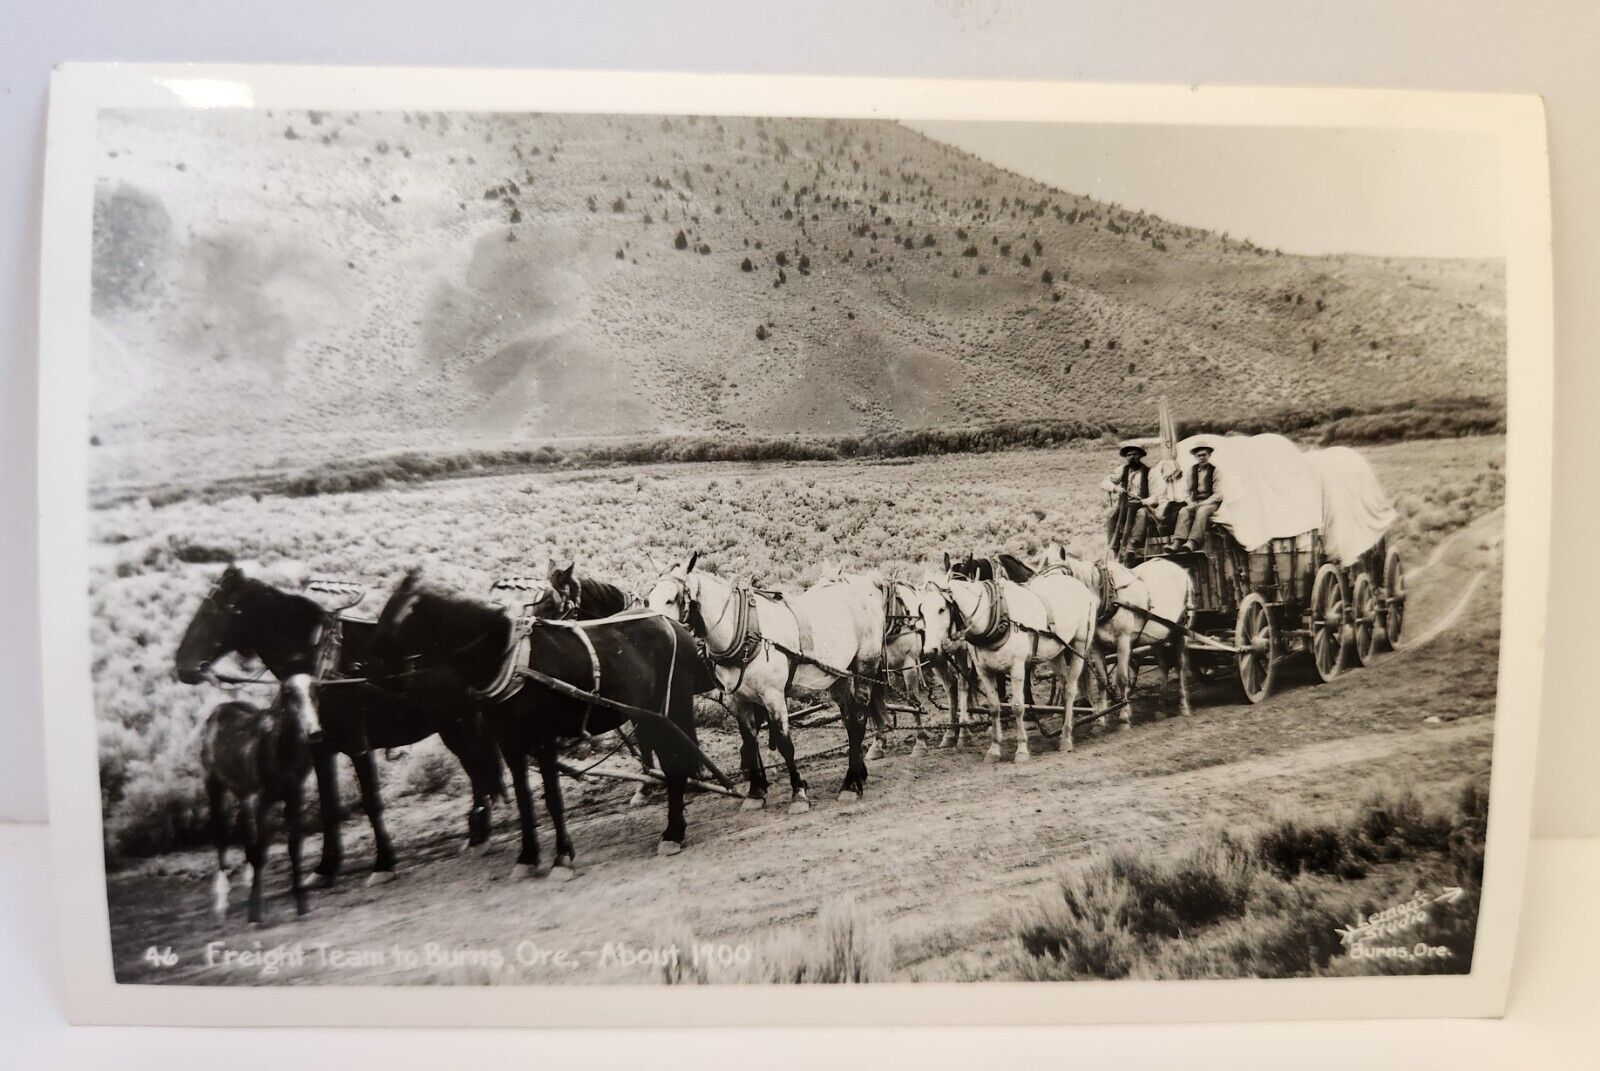 RPPC Burns Oregon About 1900 Freight Team Horses Wagon c1950s Repro Lemon's